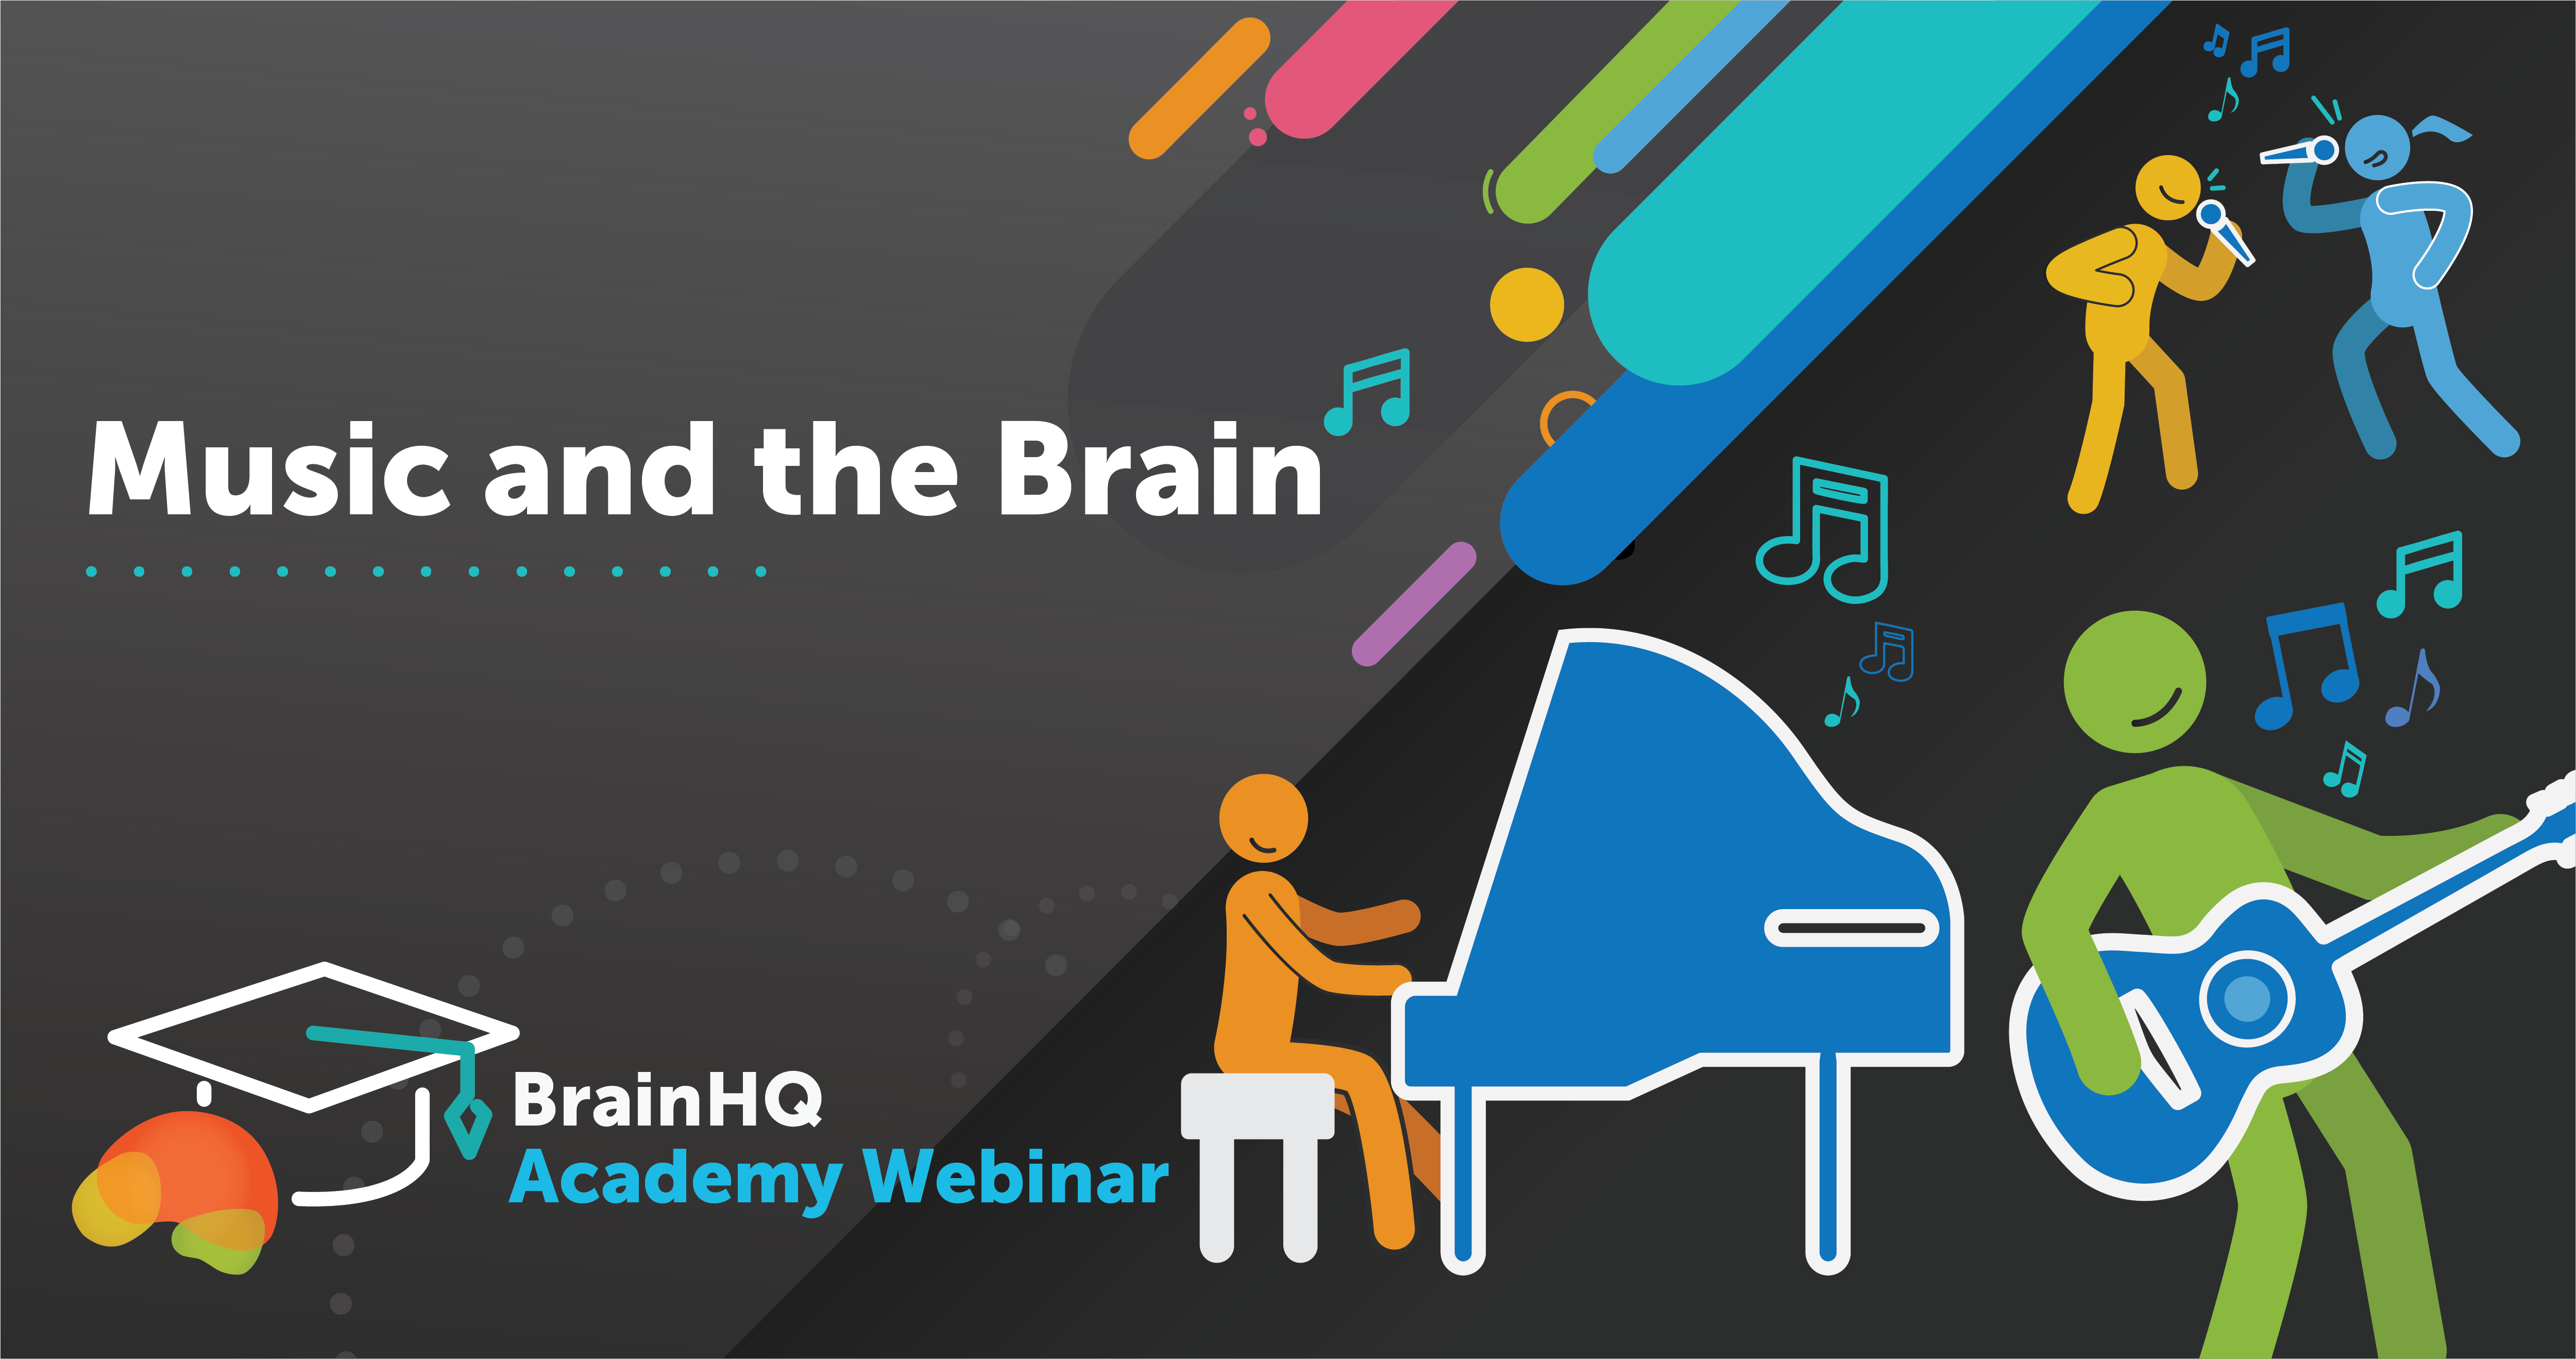 BrainHQ Academy: Music and the Brain